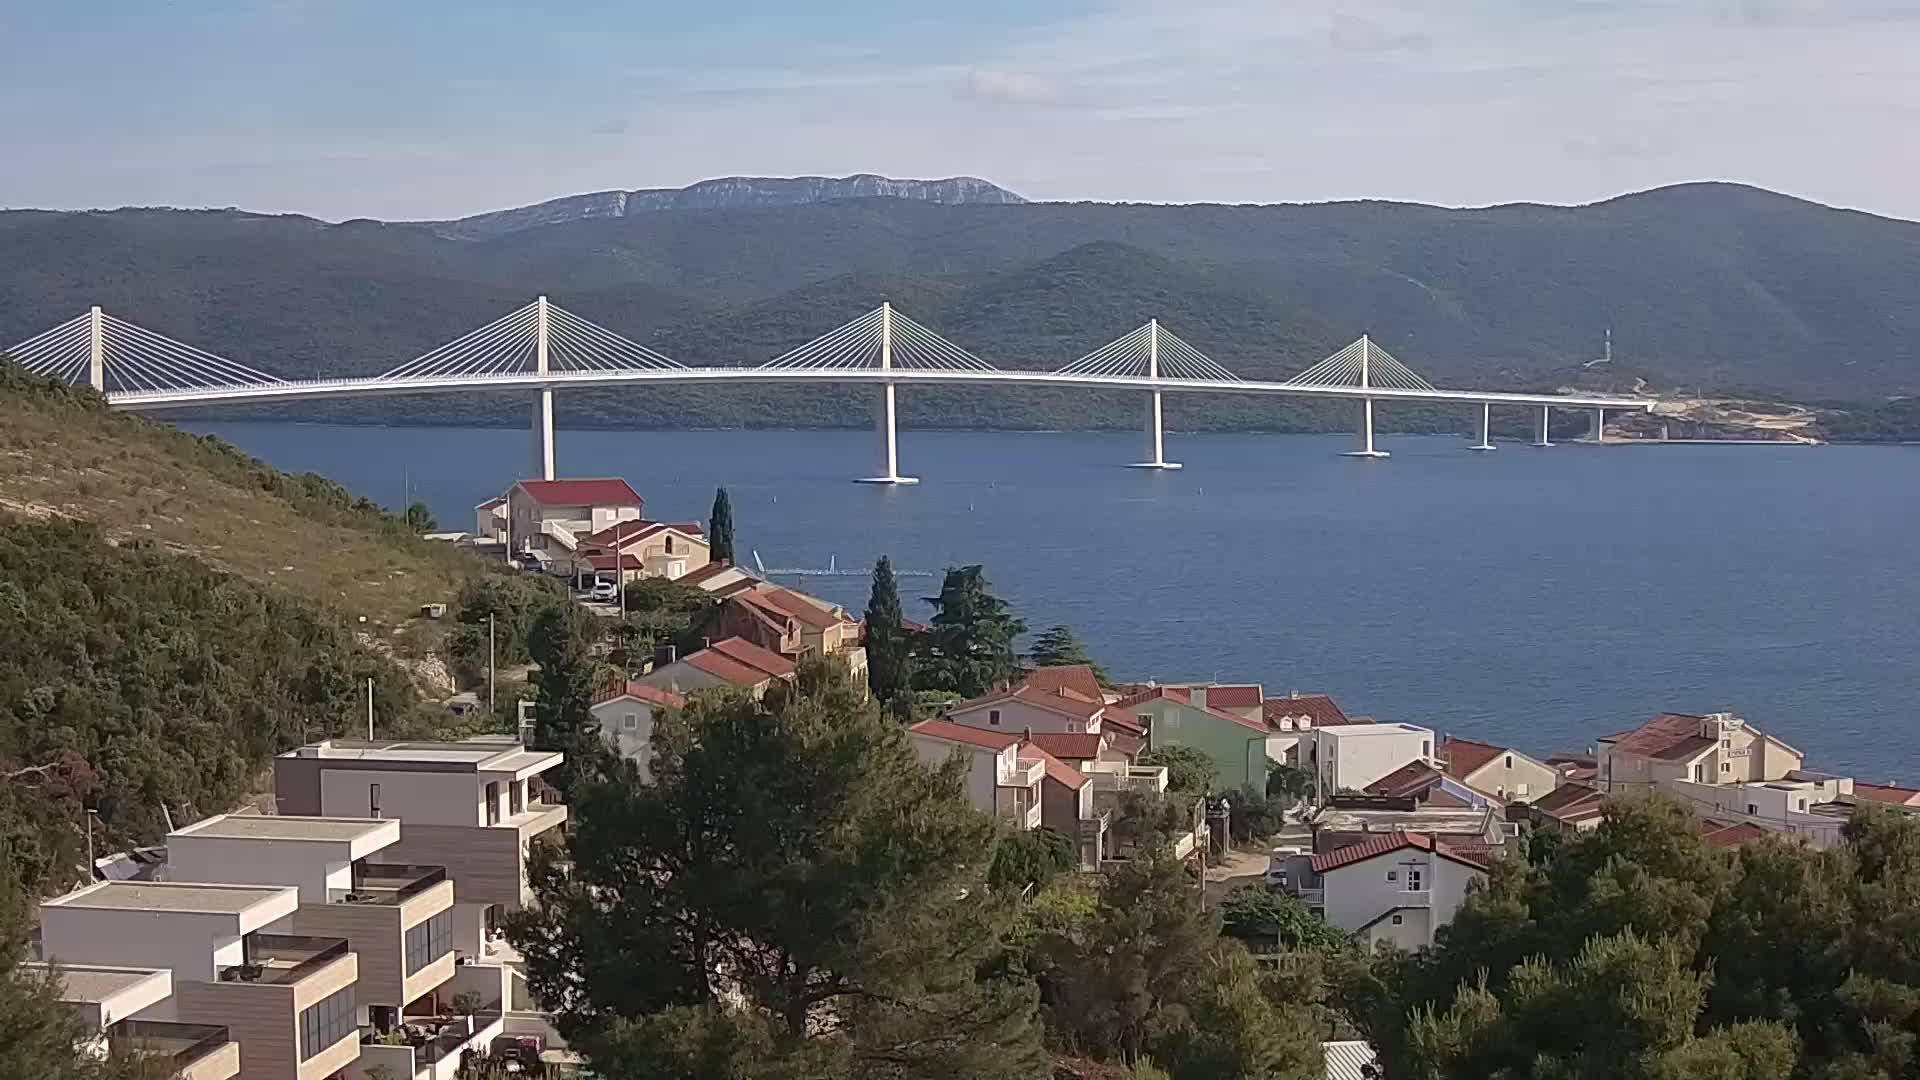 Camera en vivo Ponte de Pelješac